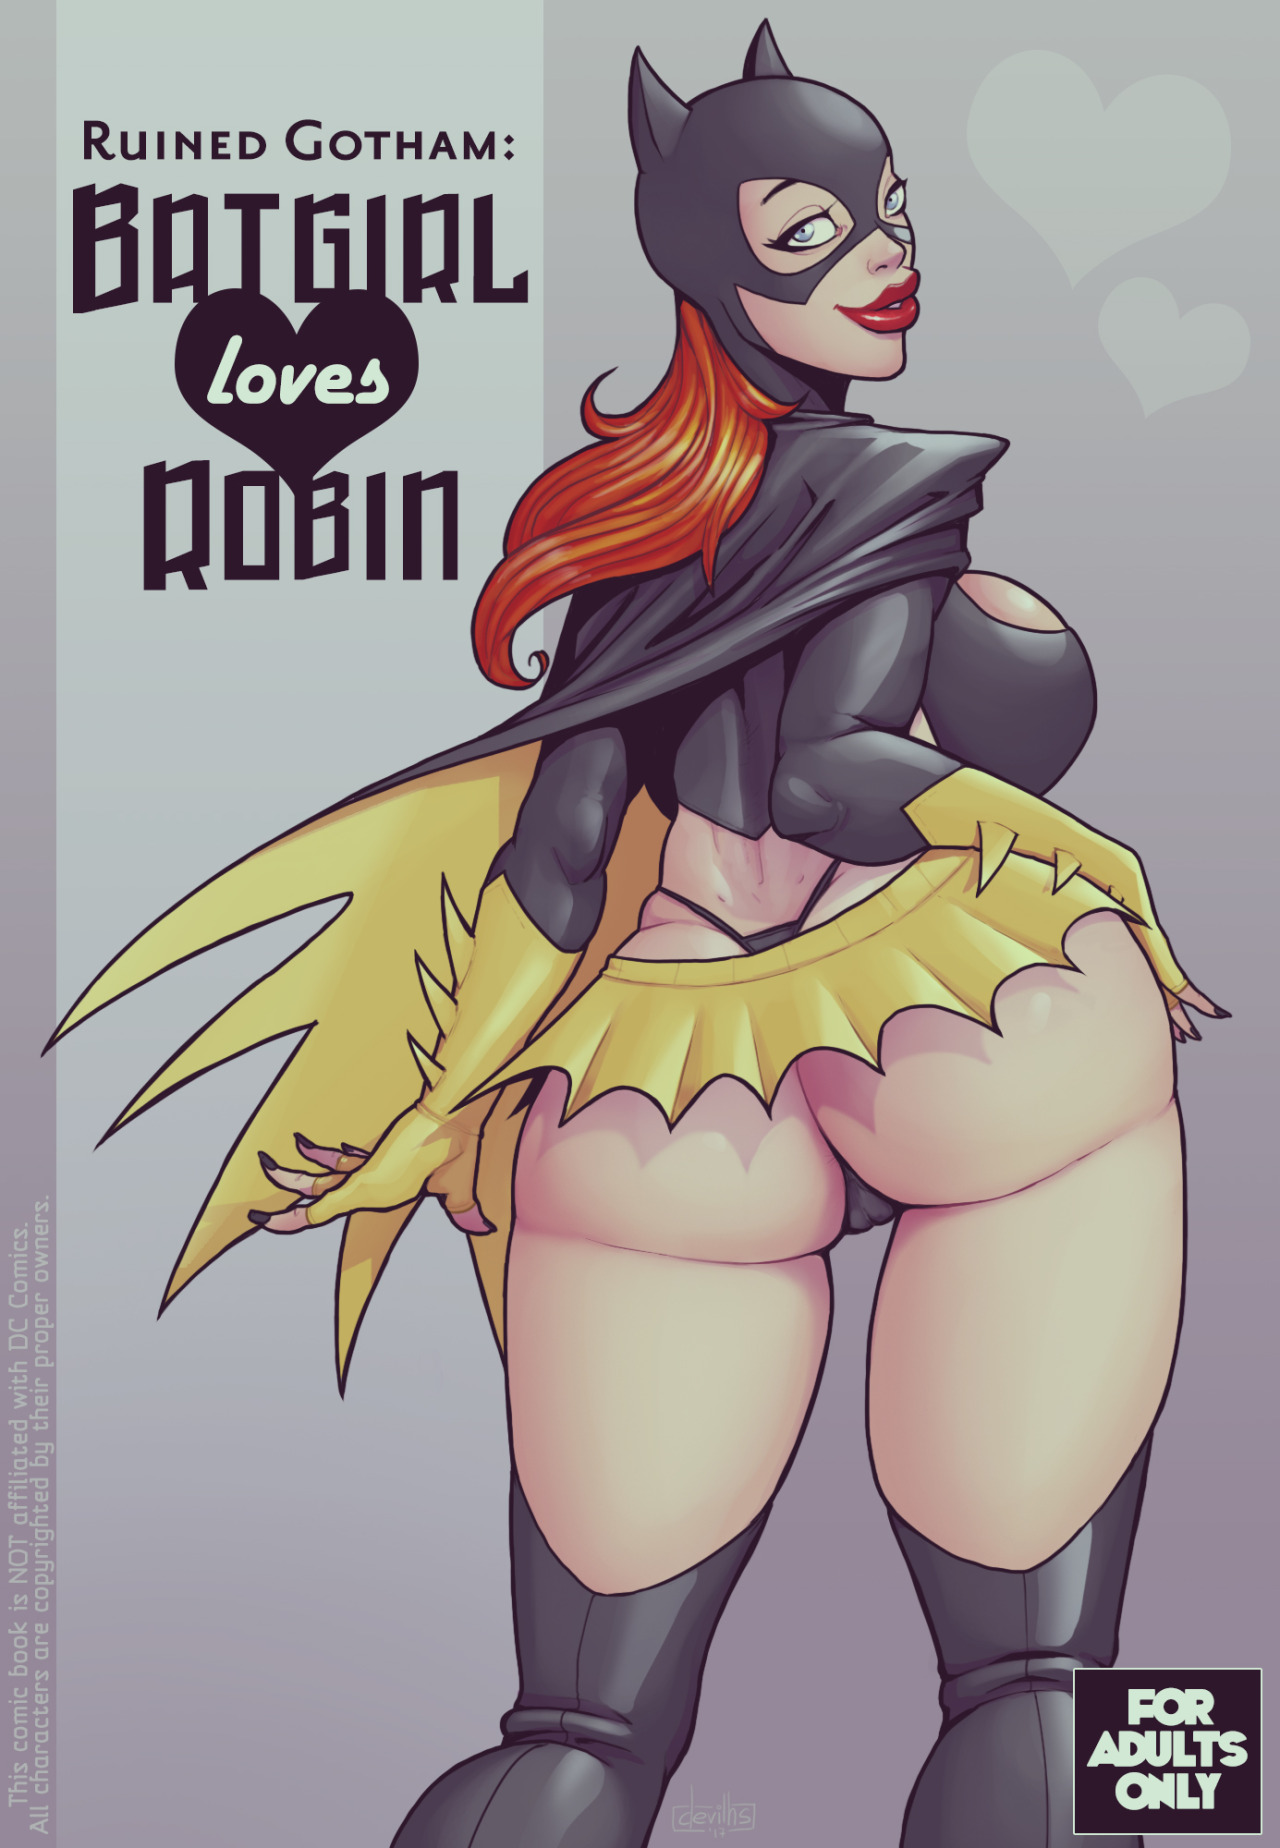 DevilHS Batgirl loves Robin Porn Comics